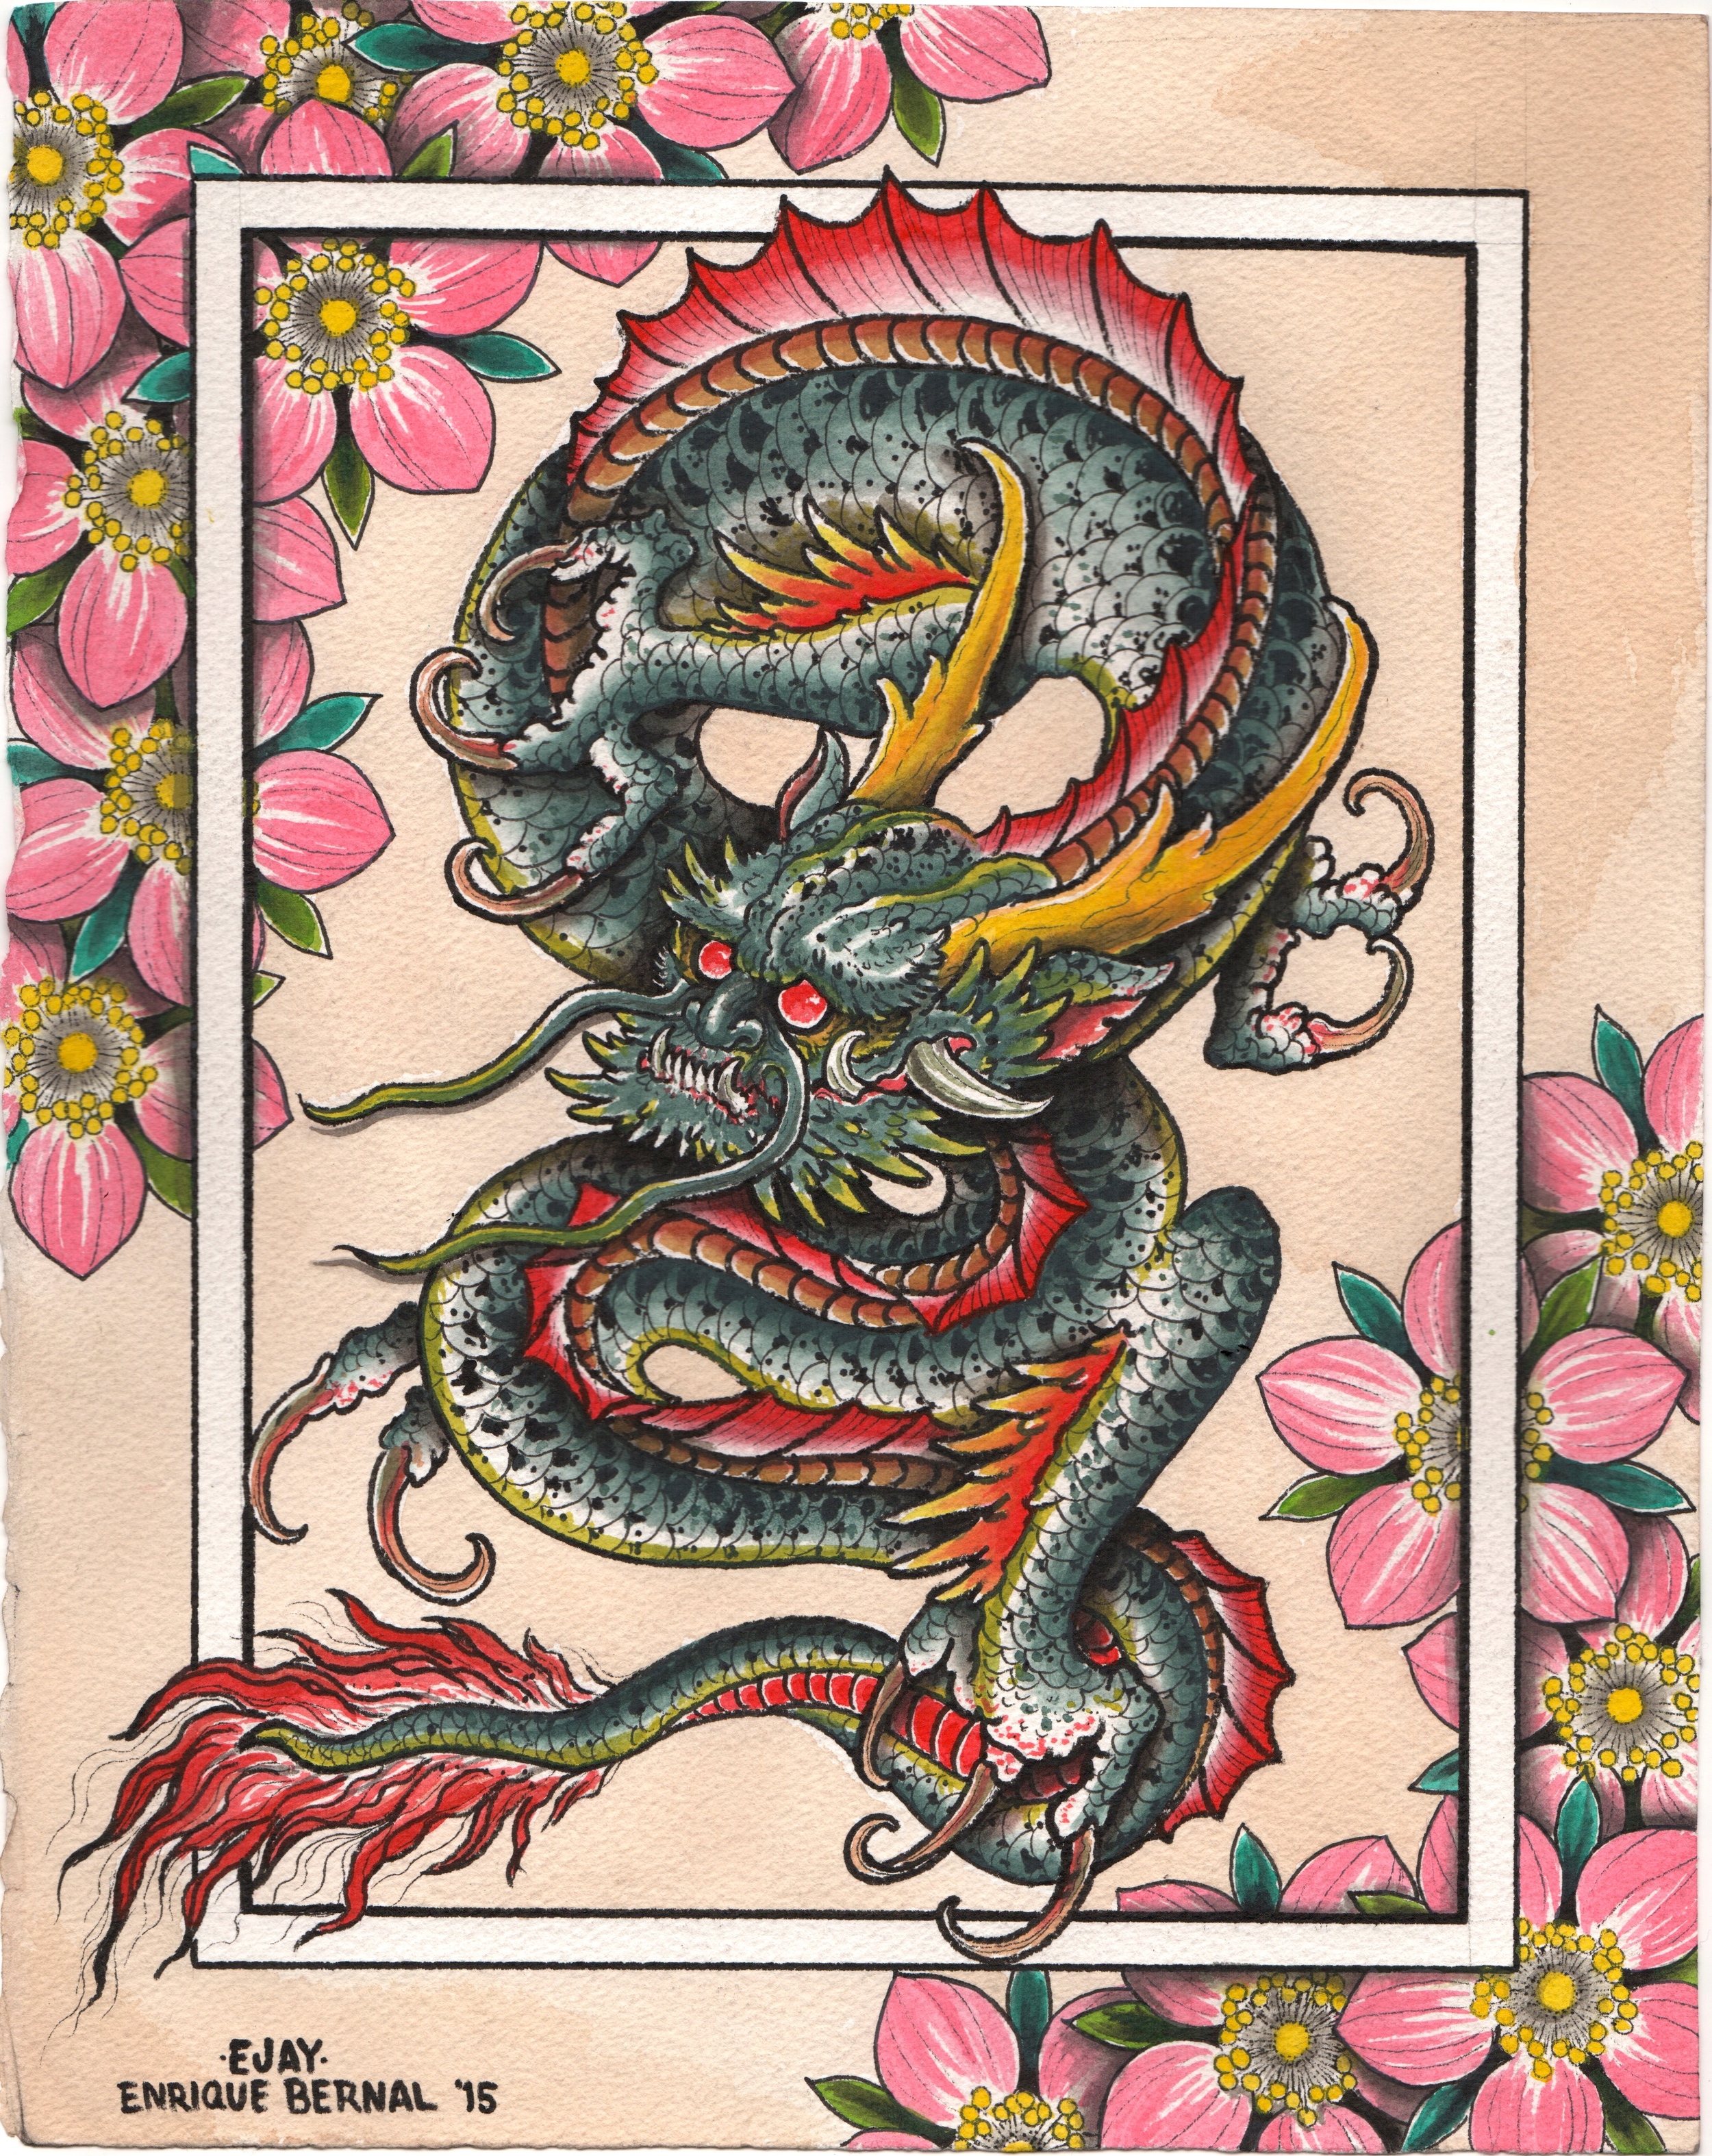 Dragon Painting enrique bernal ejay tattoo.jpeg